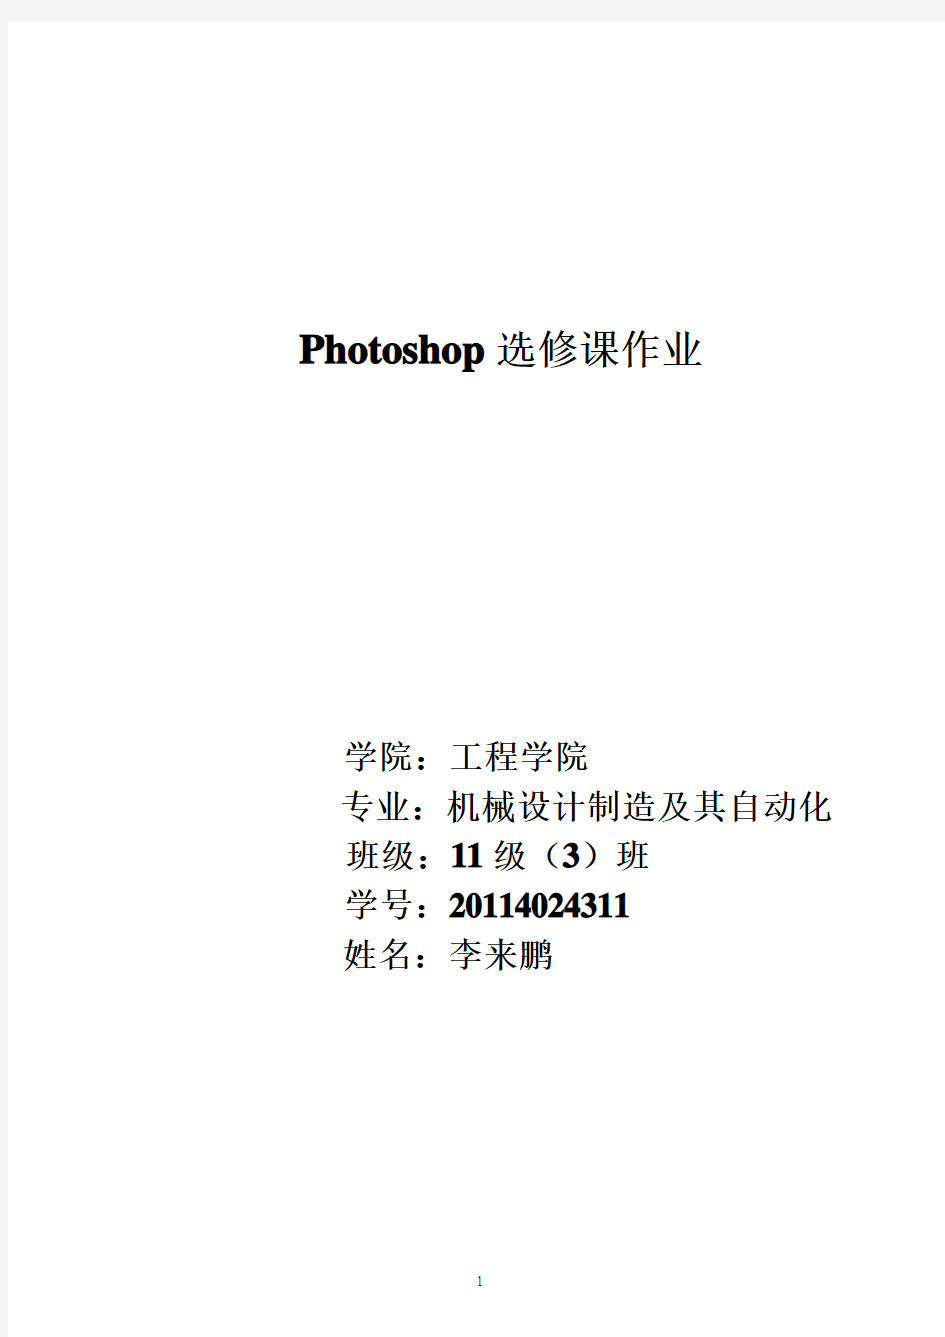 Photoshop经典教程选修课作业